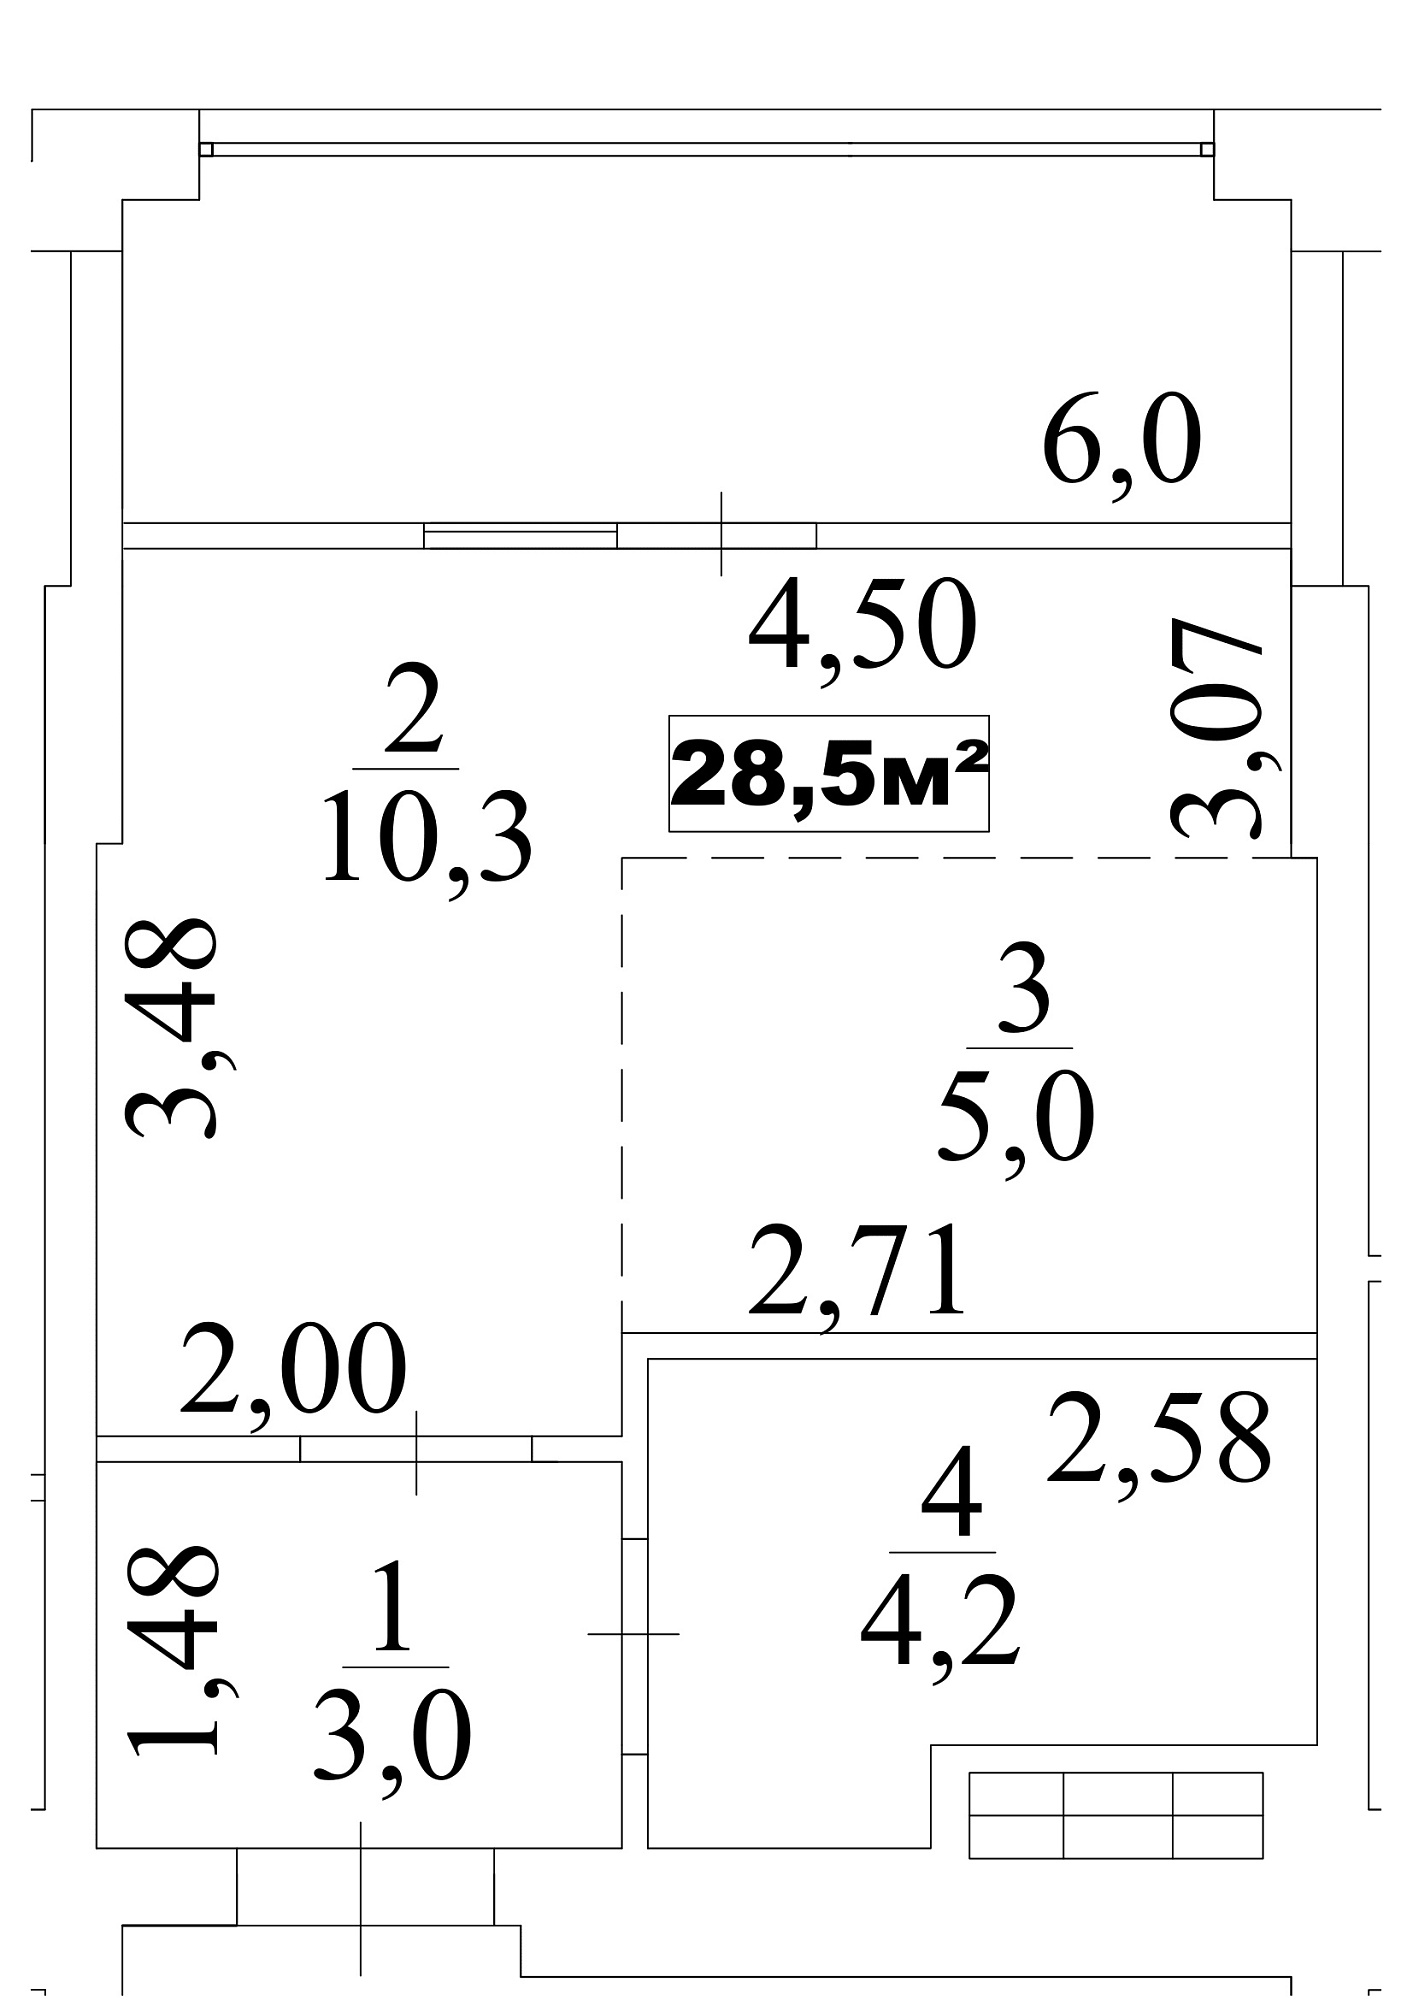 Planning Smart flats area 28.5m2, AB-10-03/00023.